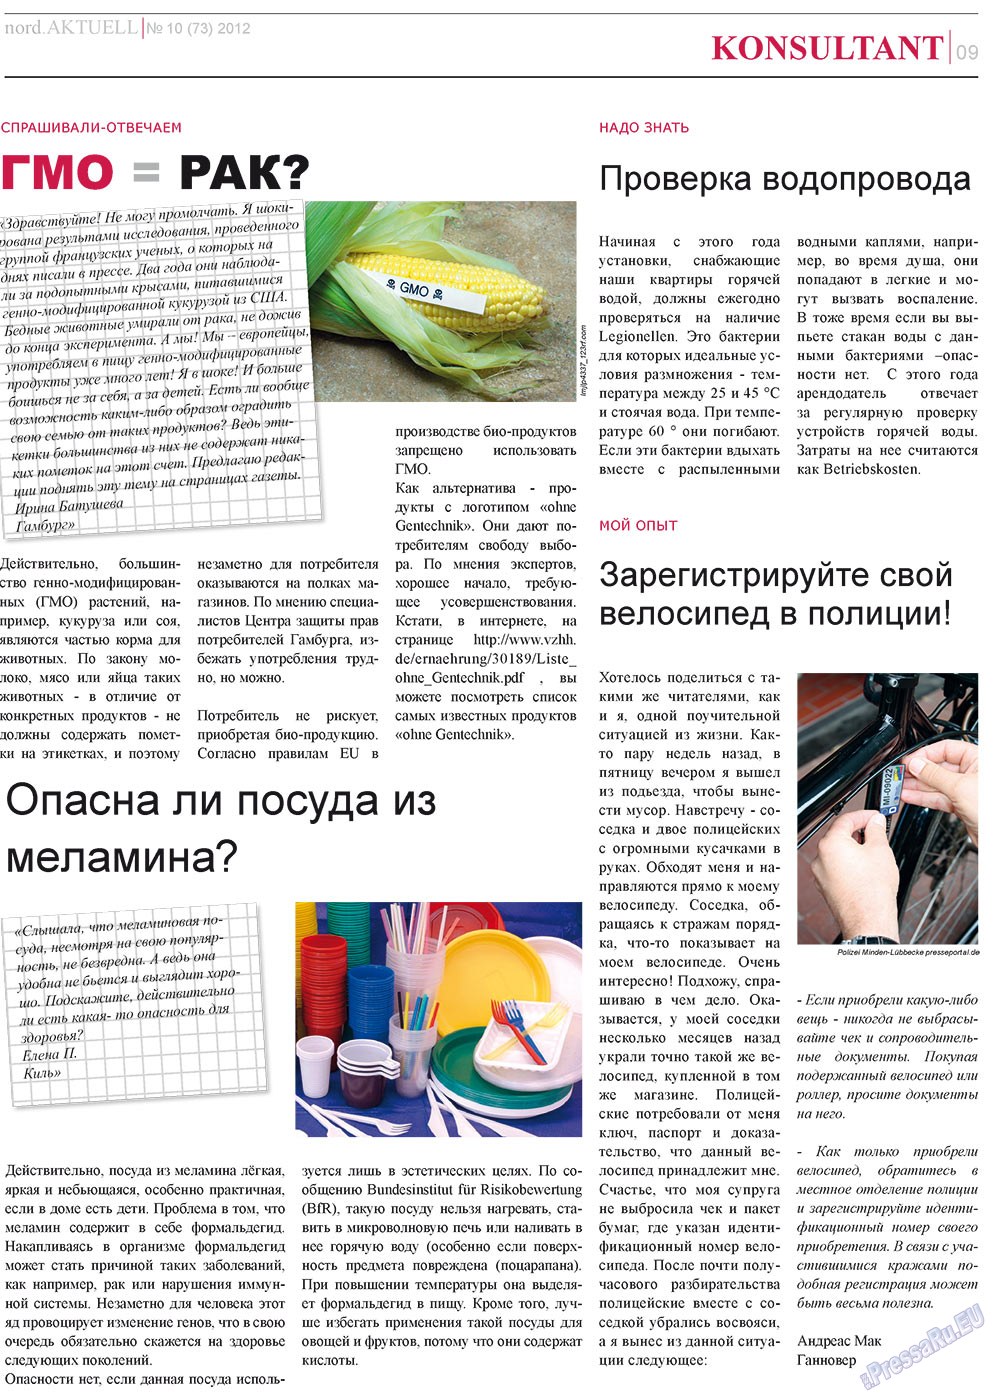 nord.Aktuell, газета. 2012 №10 стр.9